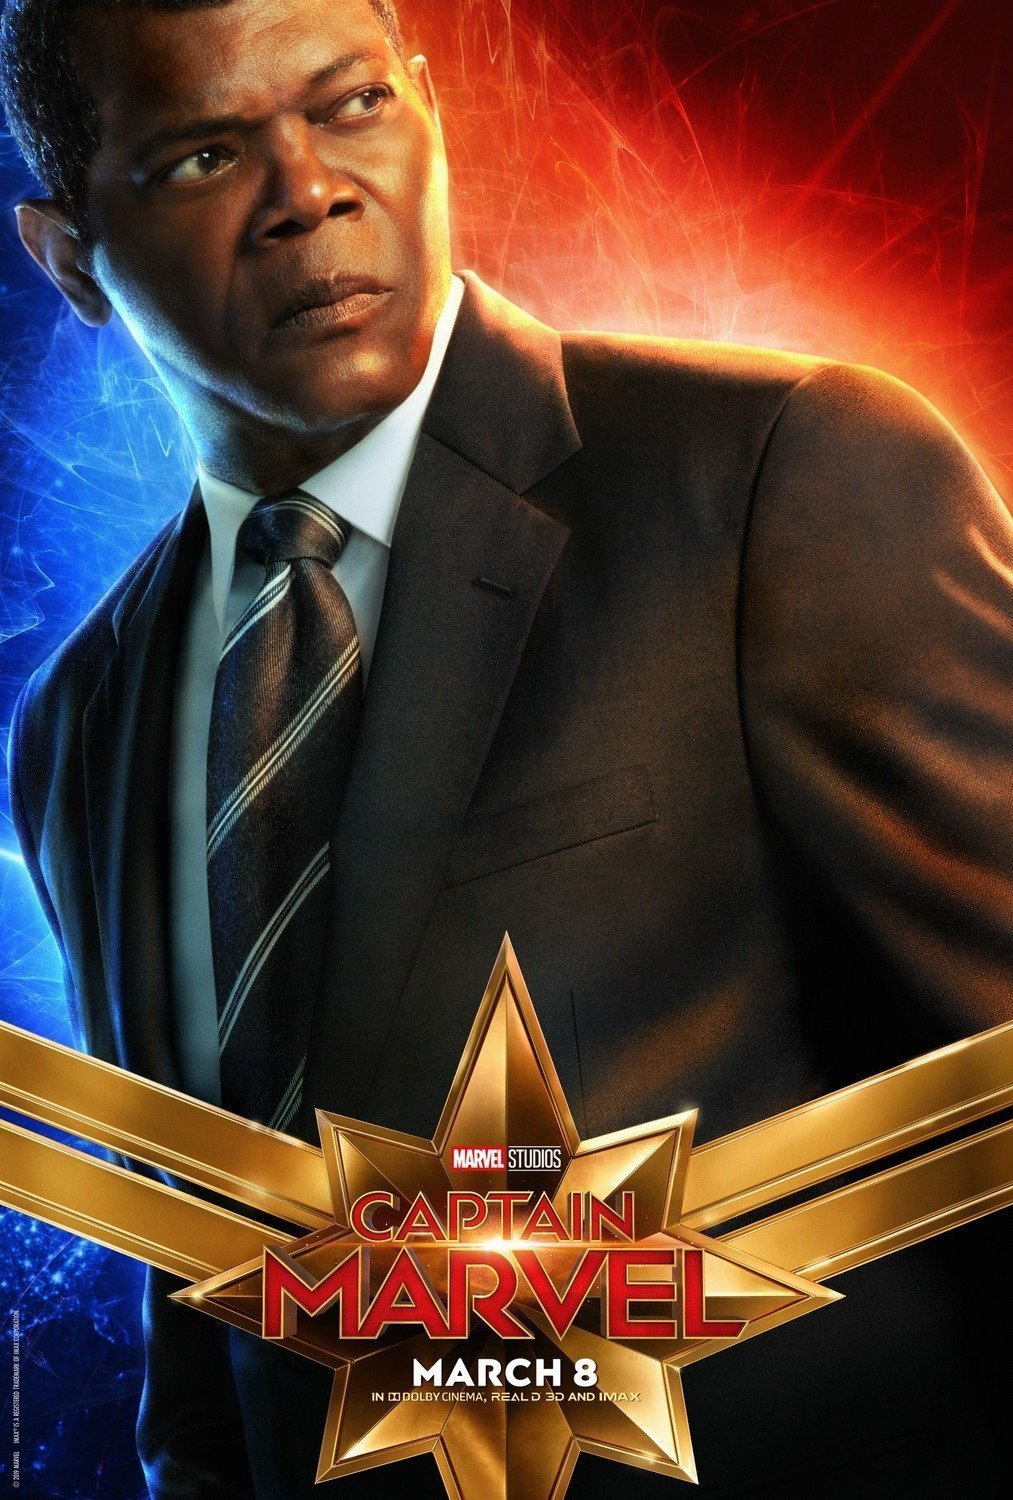 Poster du film Captain Marvel avec Samuel L. Jackson (Nick Fury)